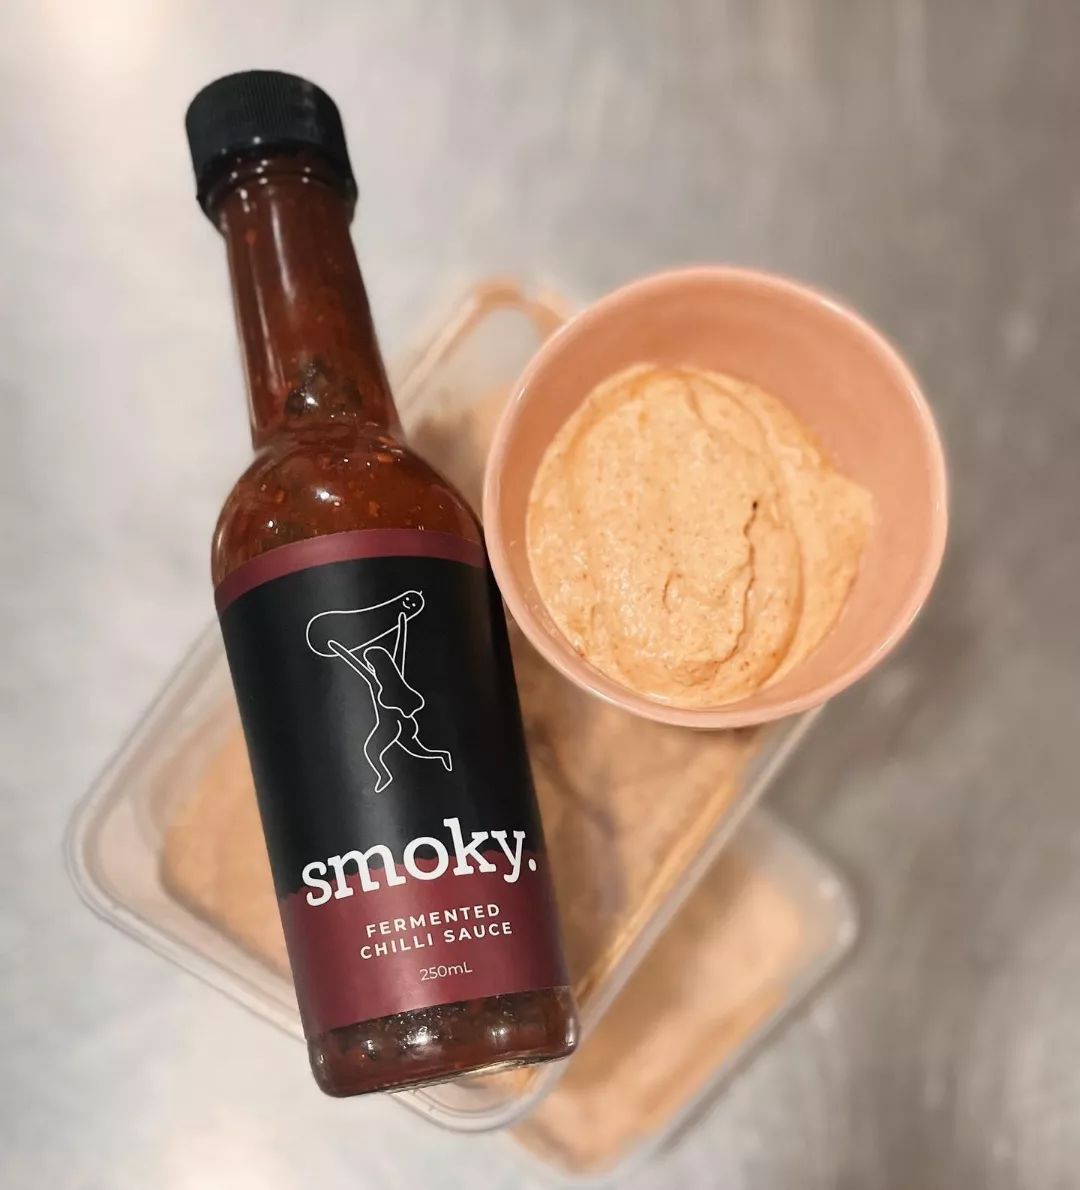 "Smoky" Fermented Chilli Sauce 250ml